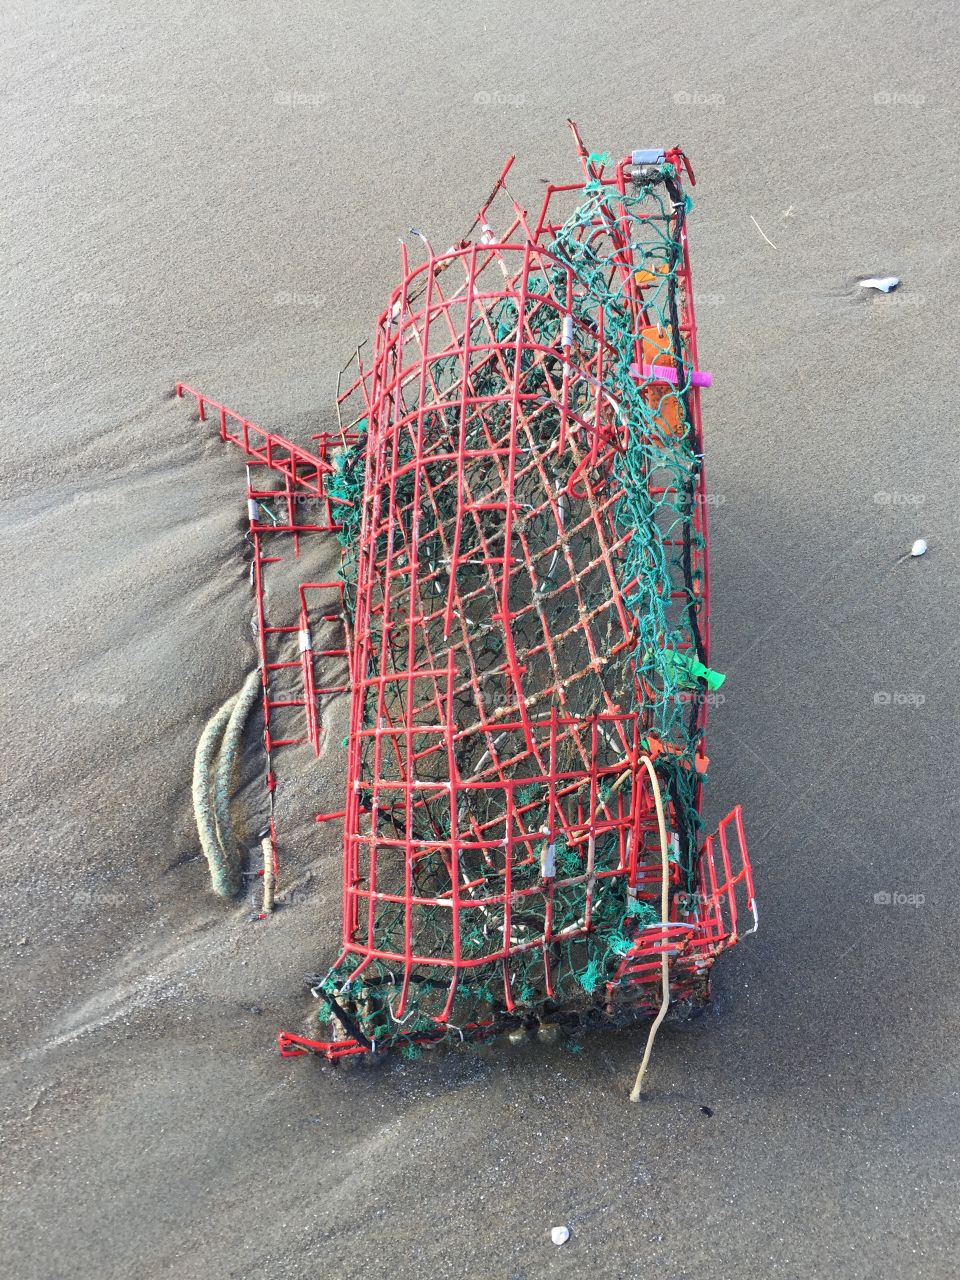 Damaged cage on sand